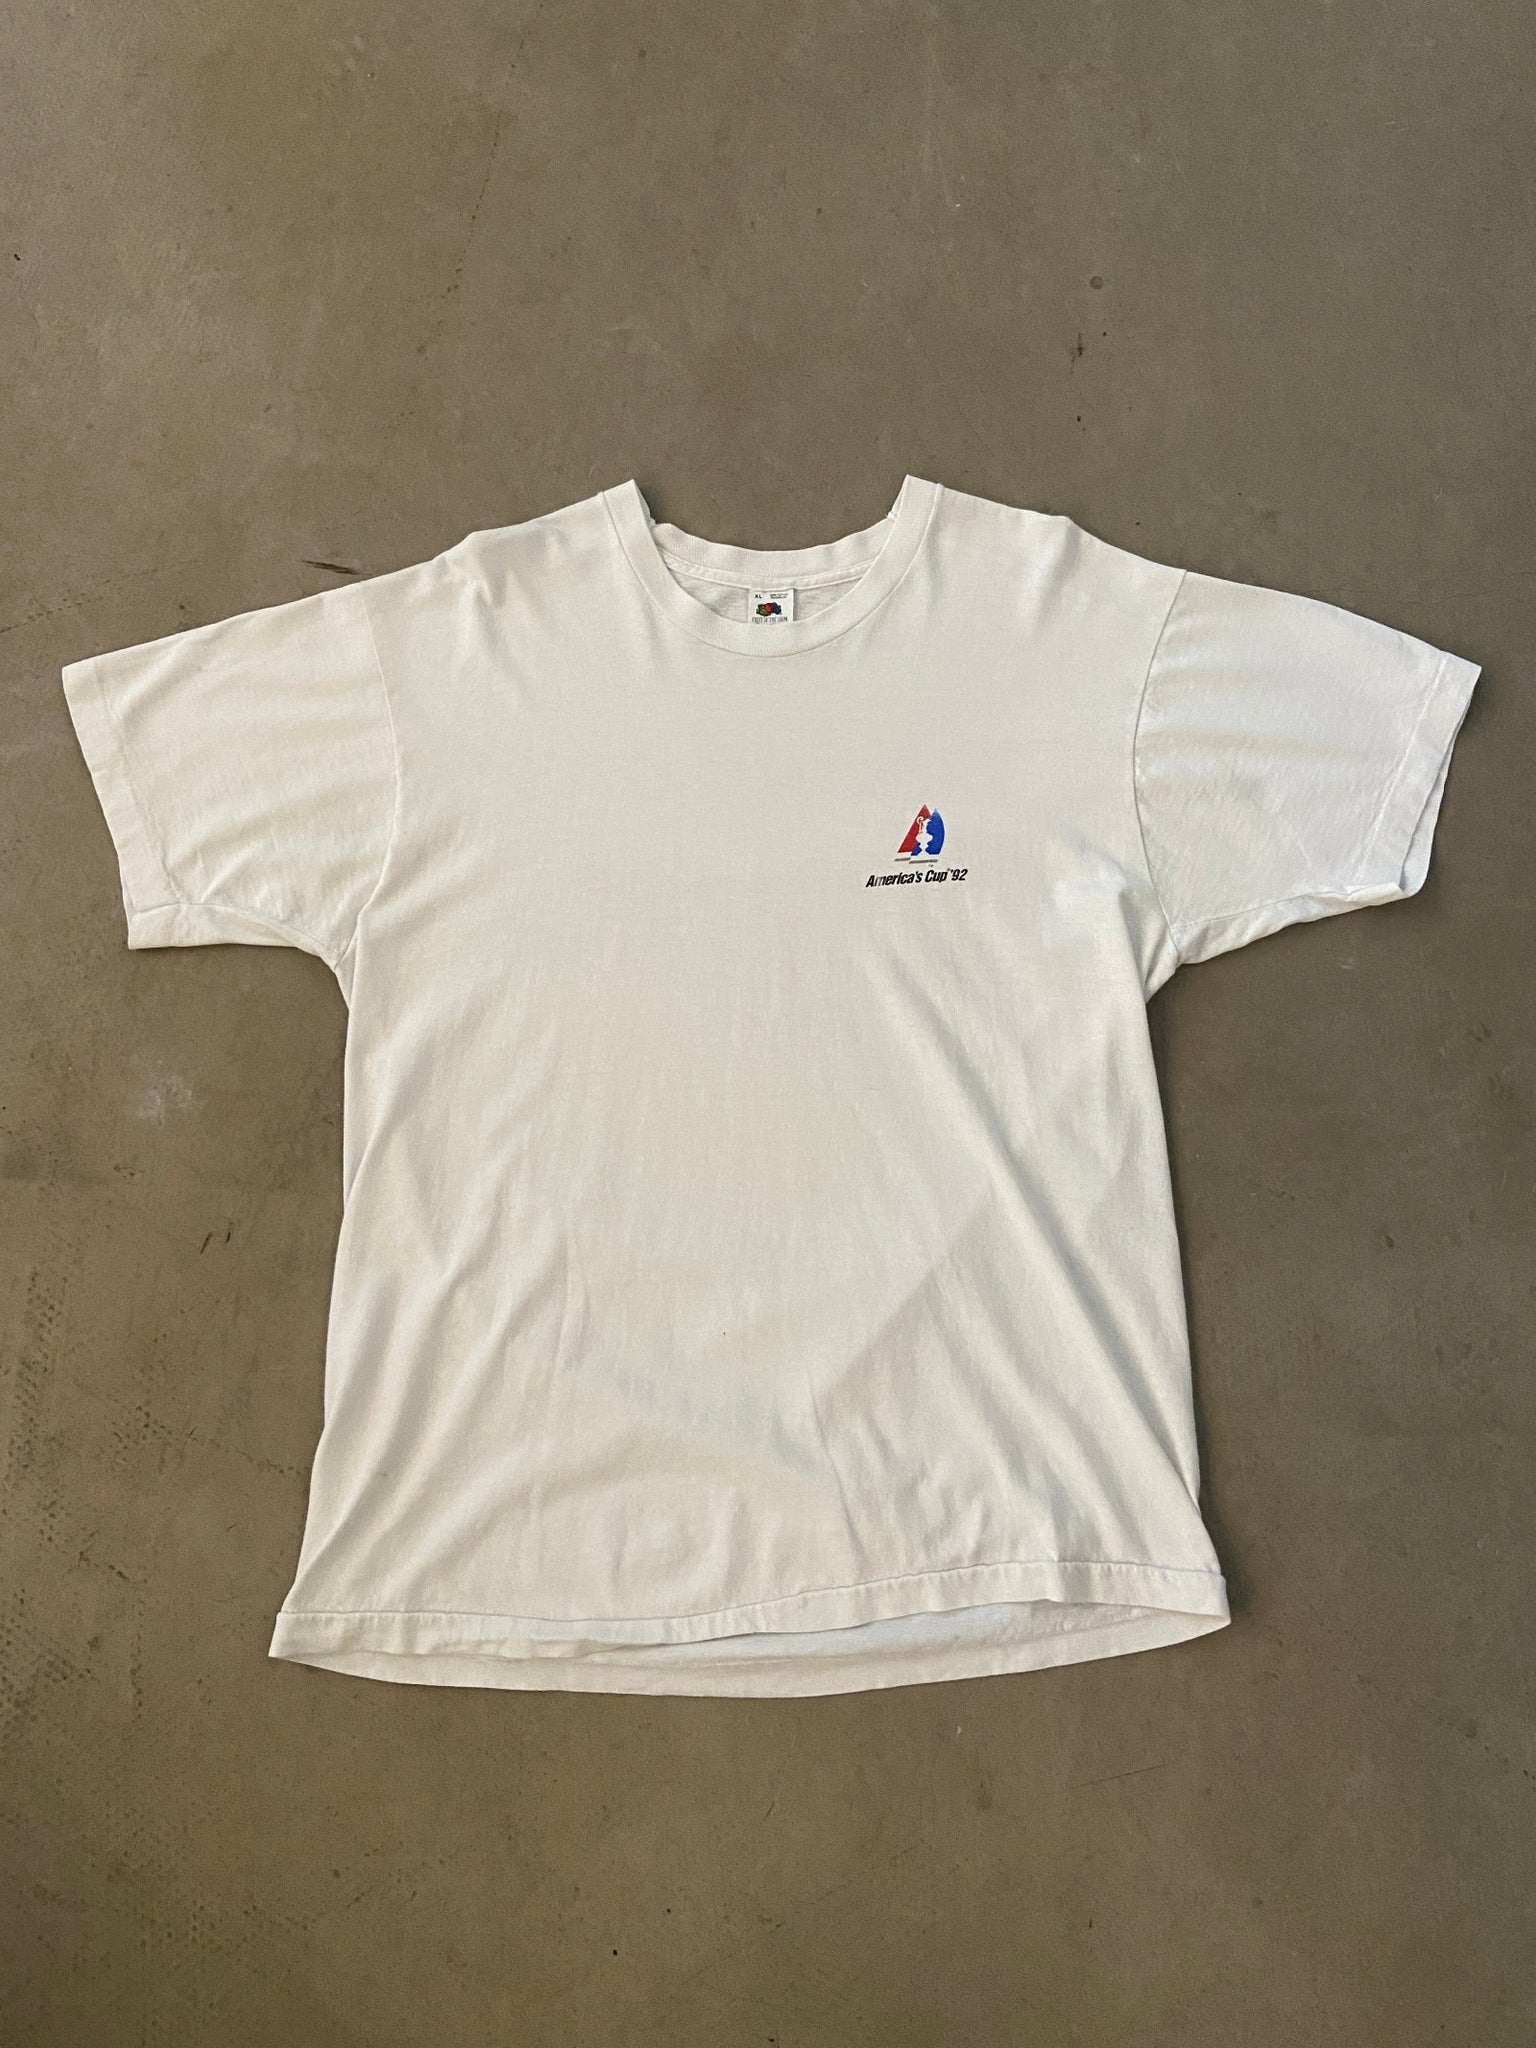 1992 America’s Cup Mount Gay T-shirt - XL